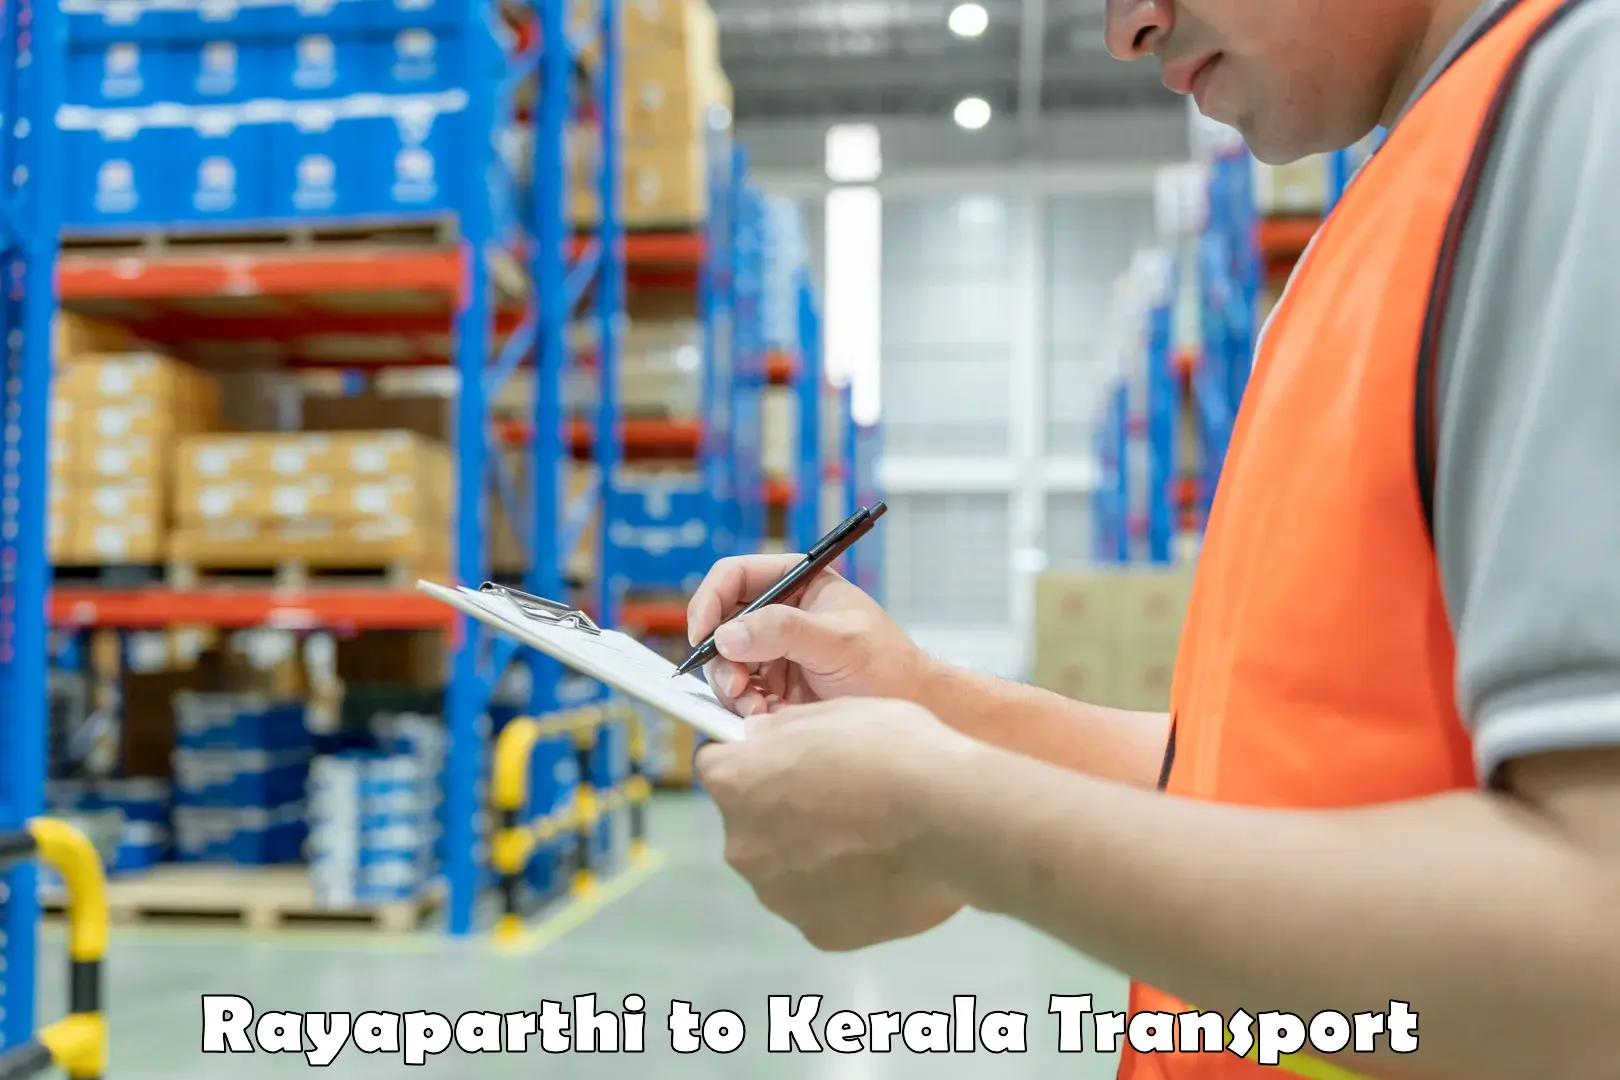 Vehicle parcel service Rayaparthi to Trivandrum